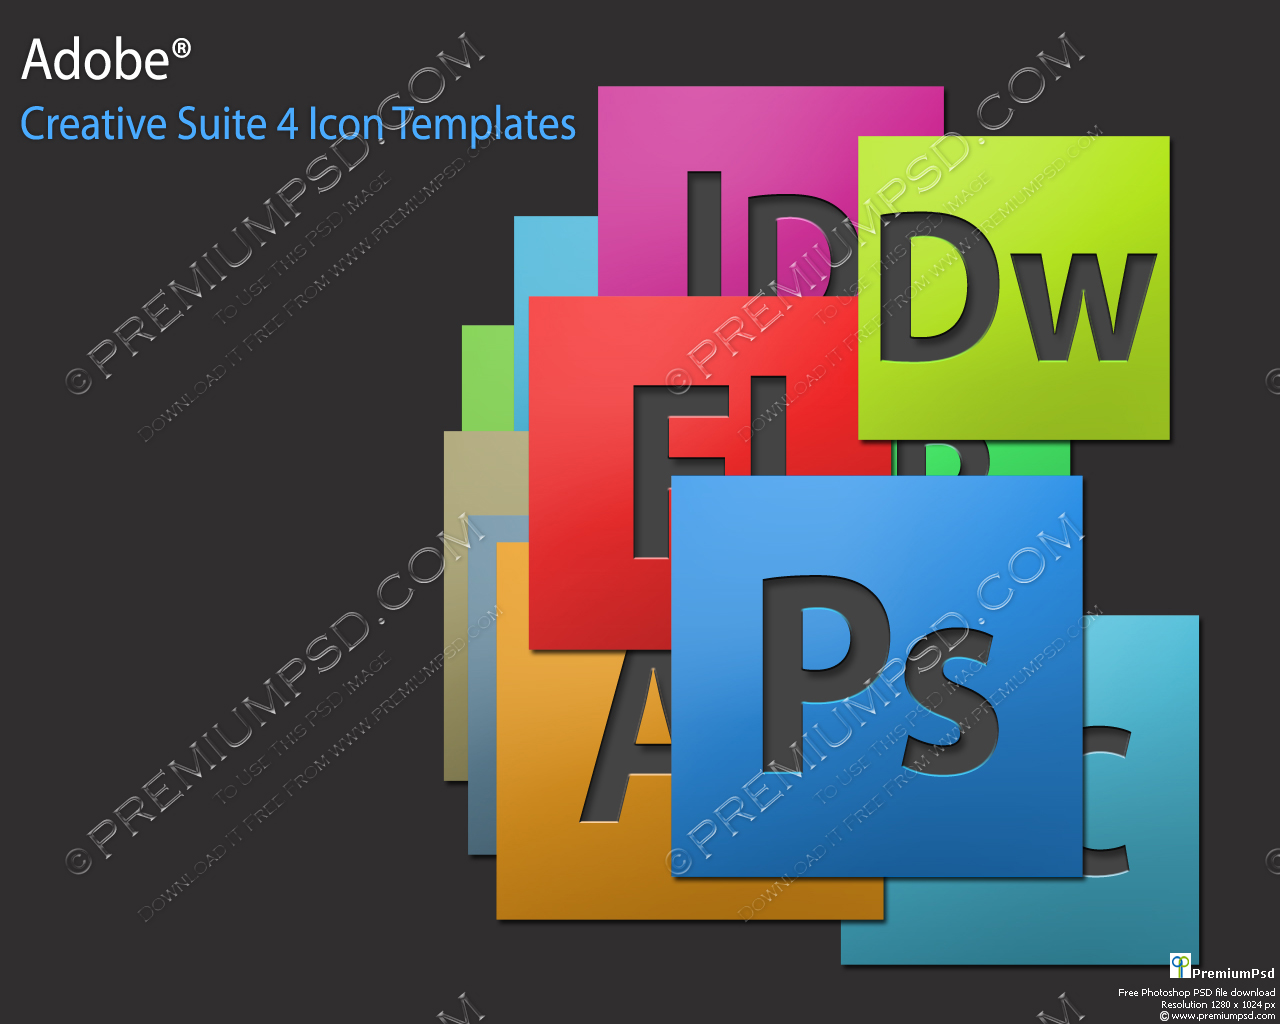 Adobe Creative Suite 4 Logo photo - 1